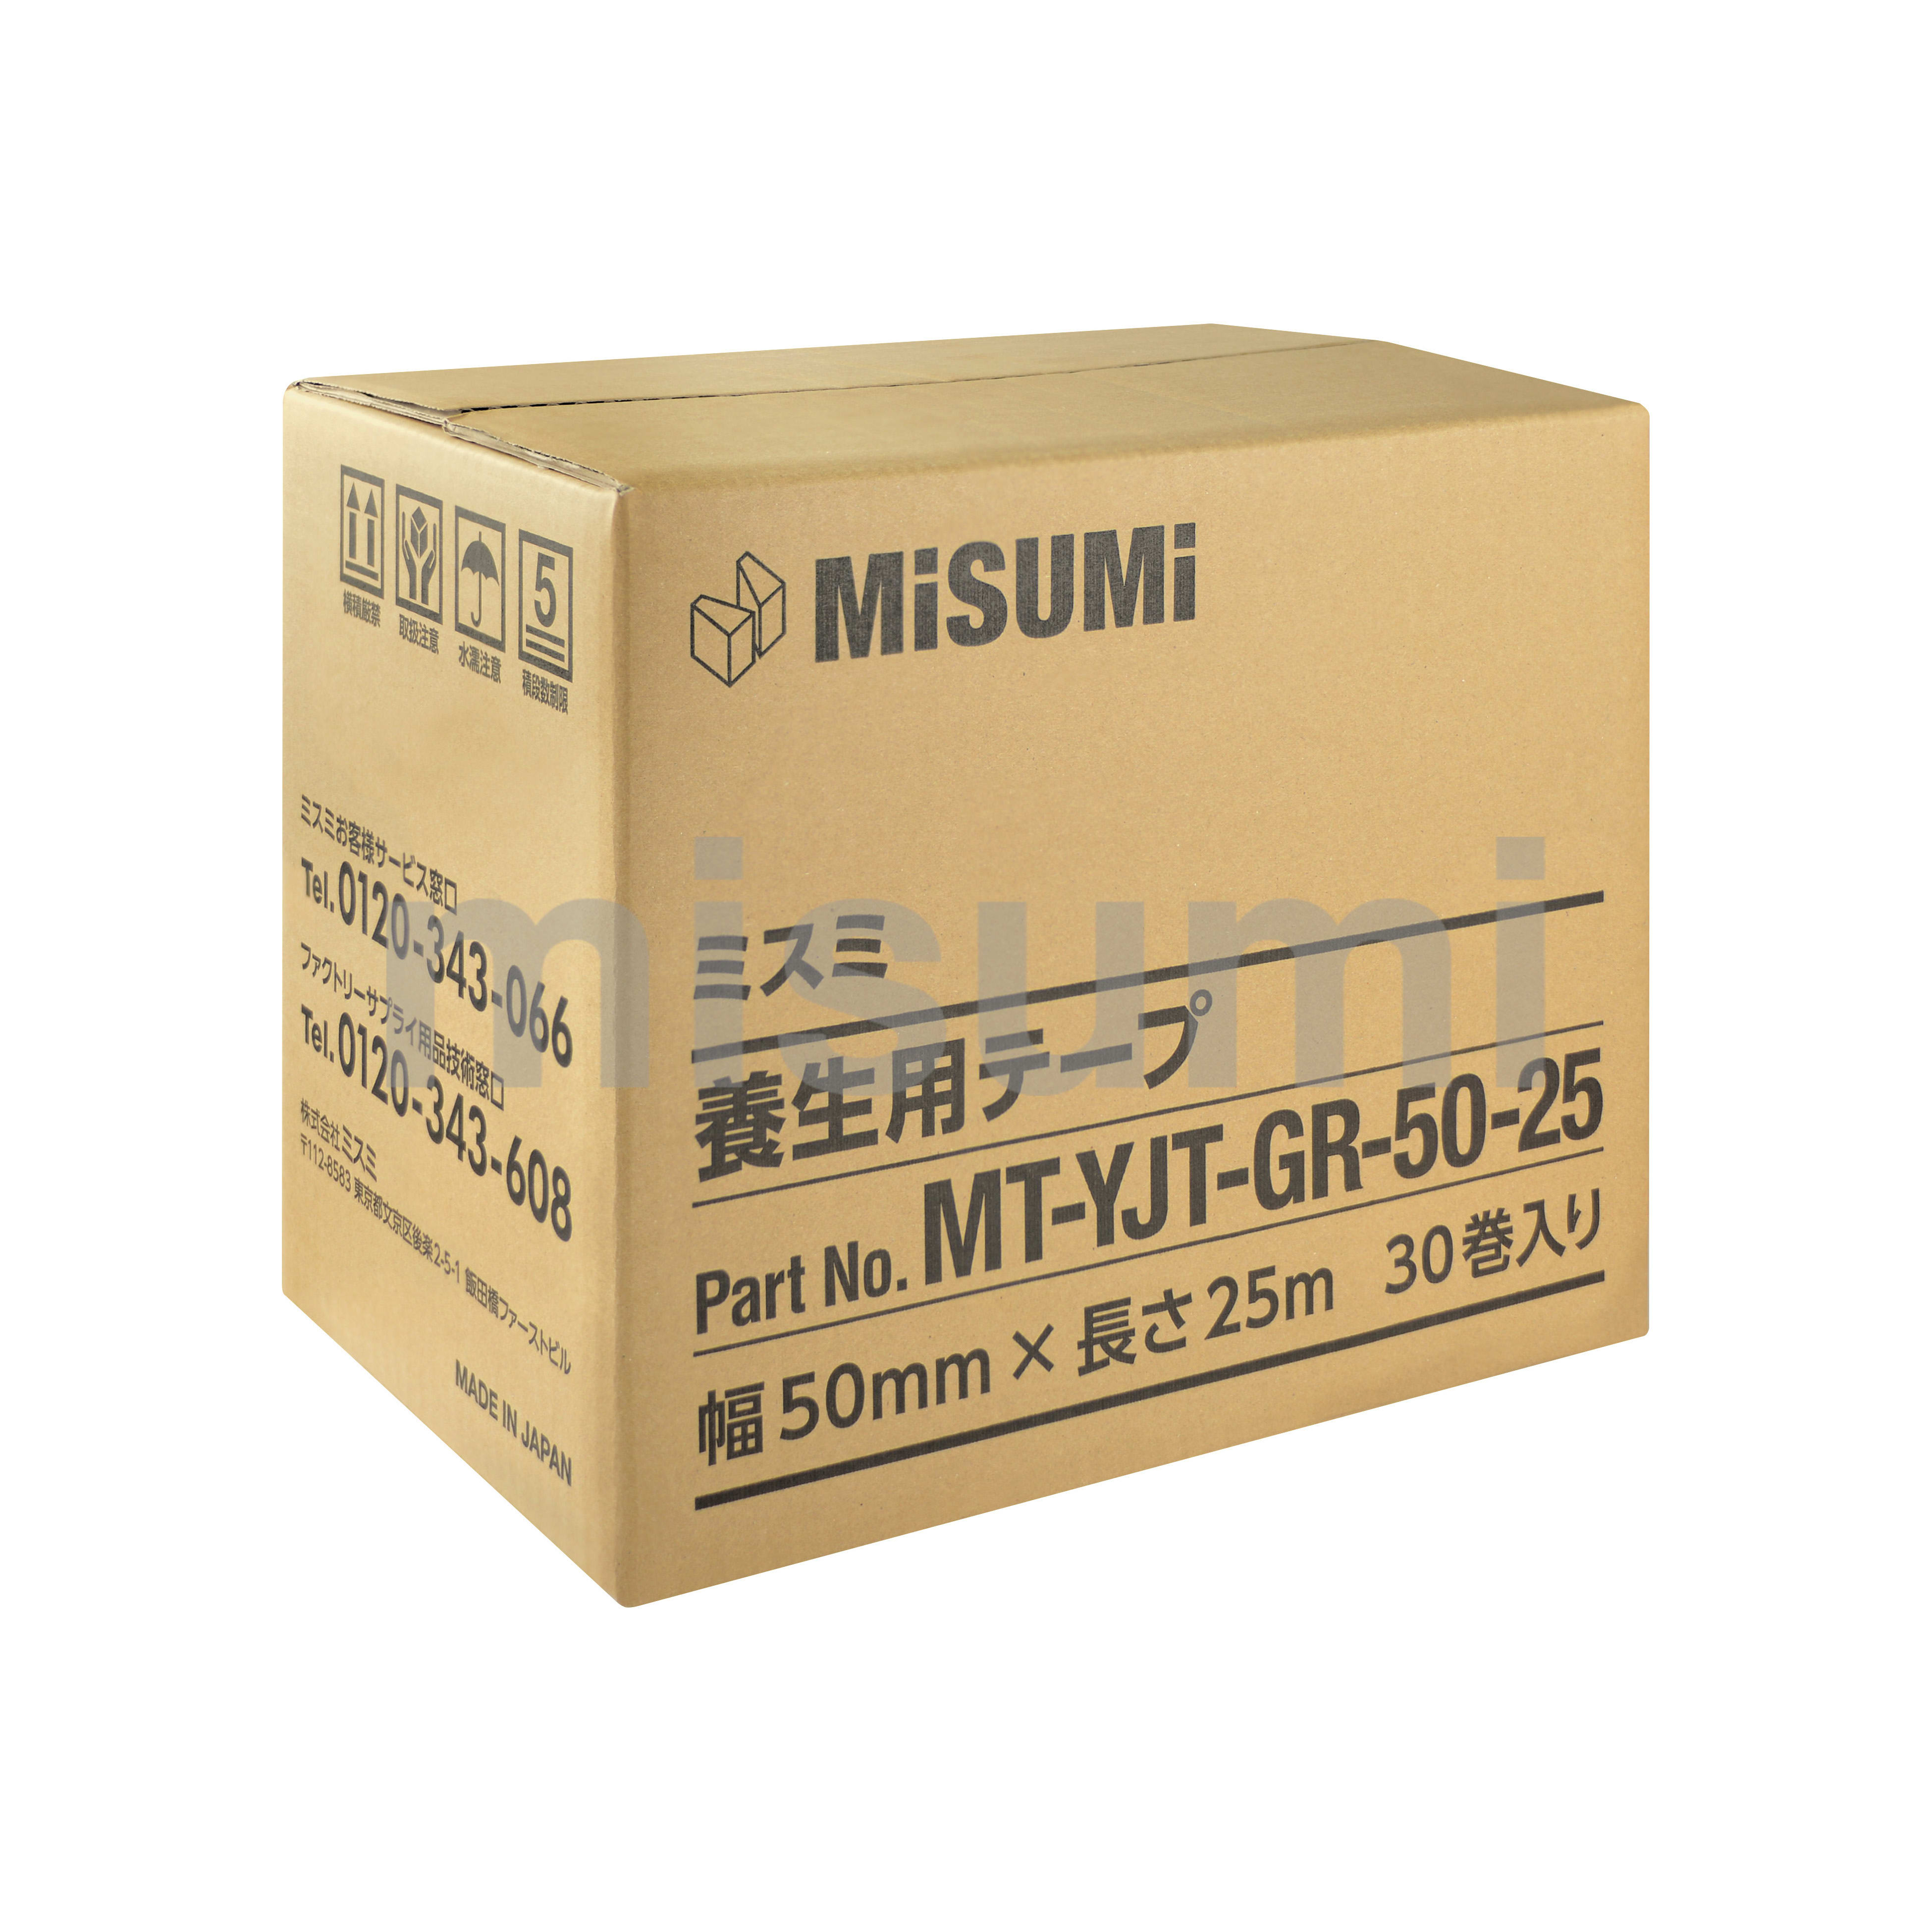 MT-YJT-GR-50-25-30P 養生テープ ミスミ MISUMI(ミスミ)